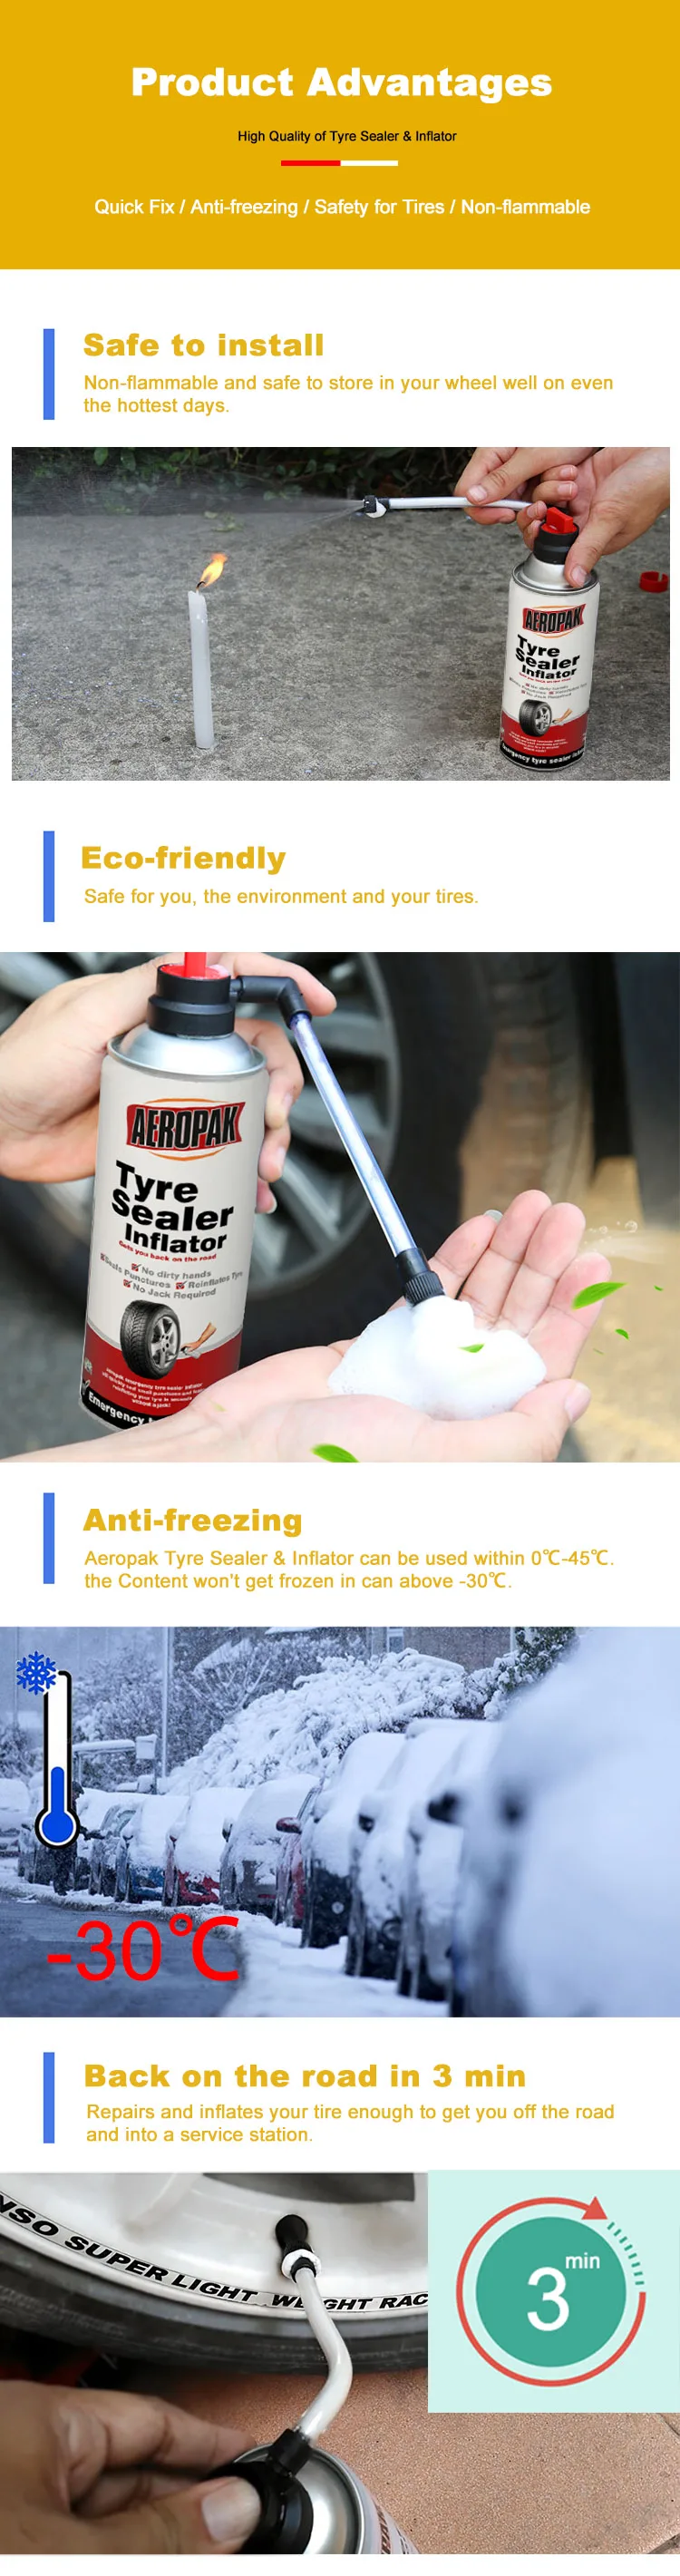 Aeropak Tire Sealant Tire Sealer Inflator Spray